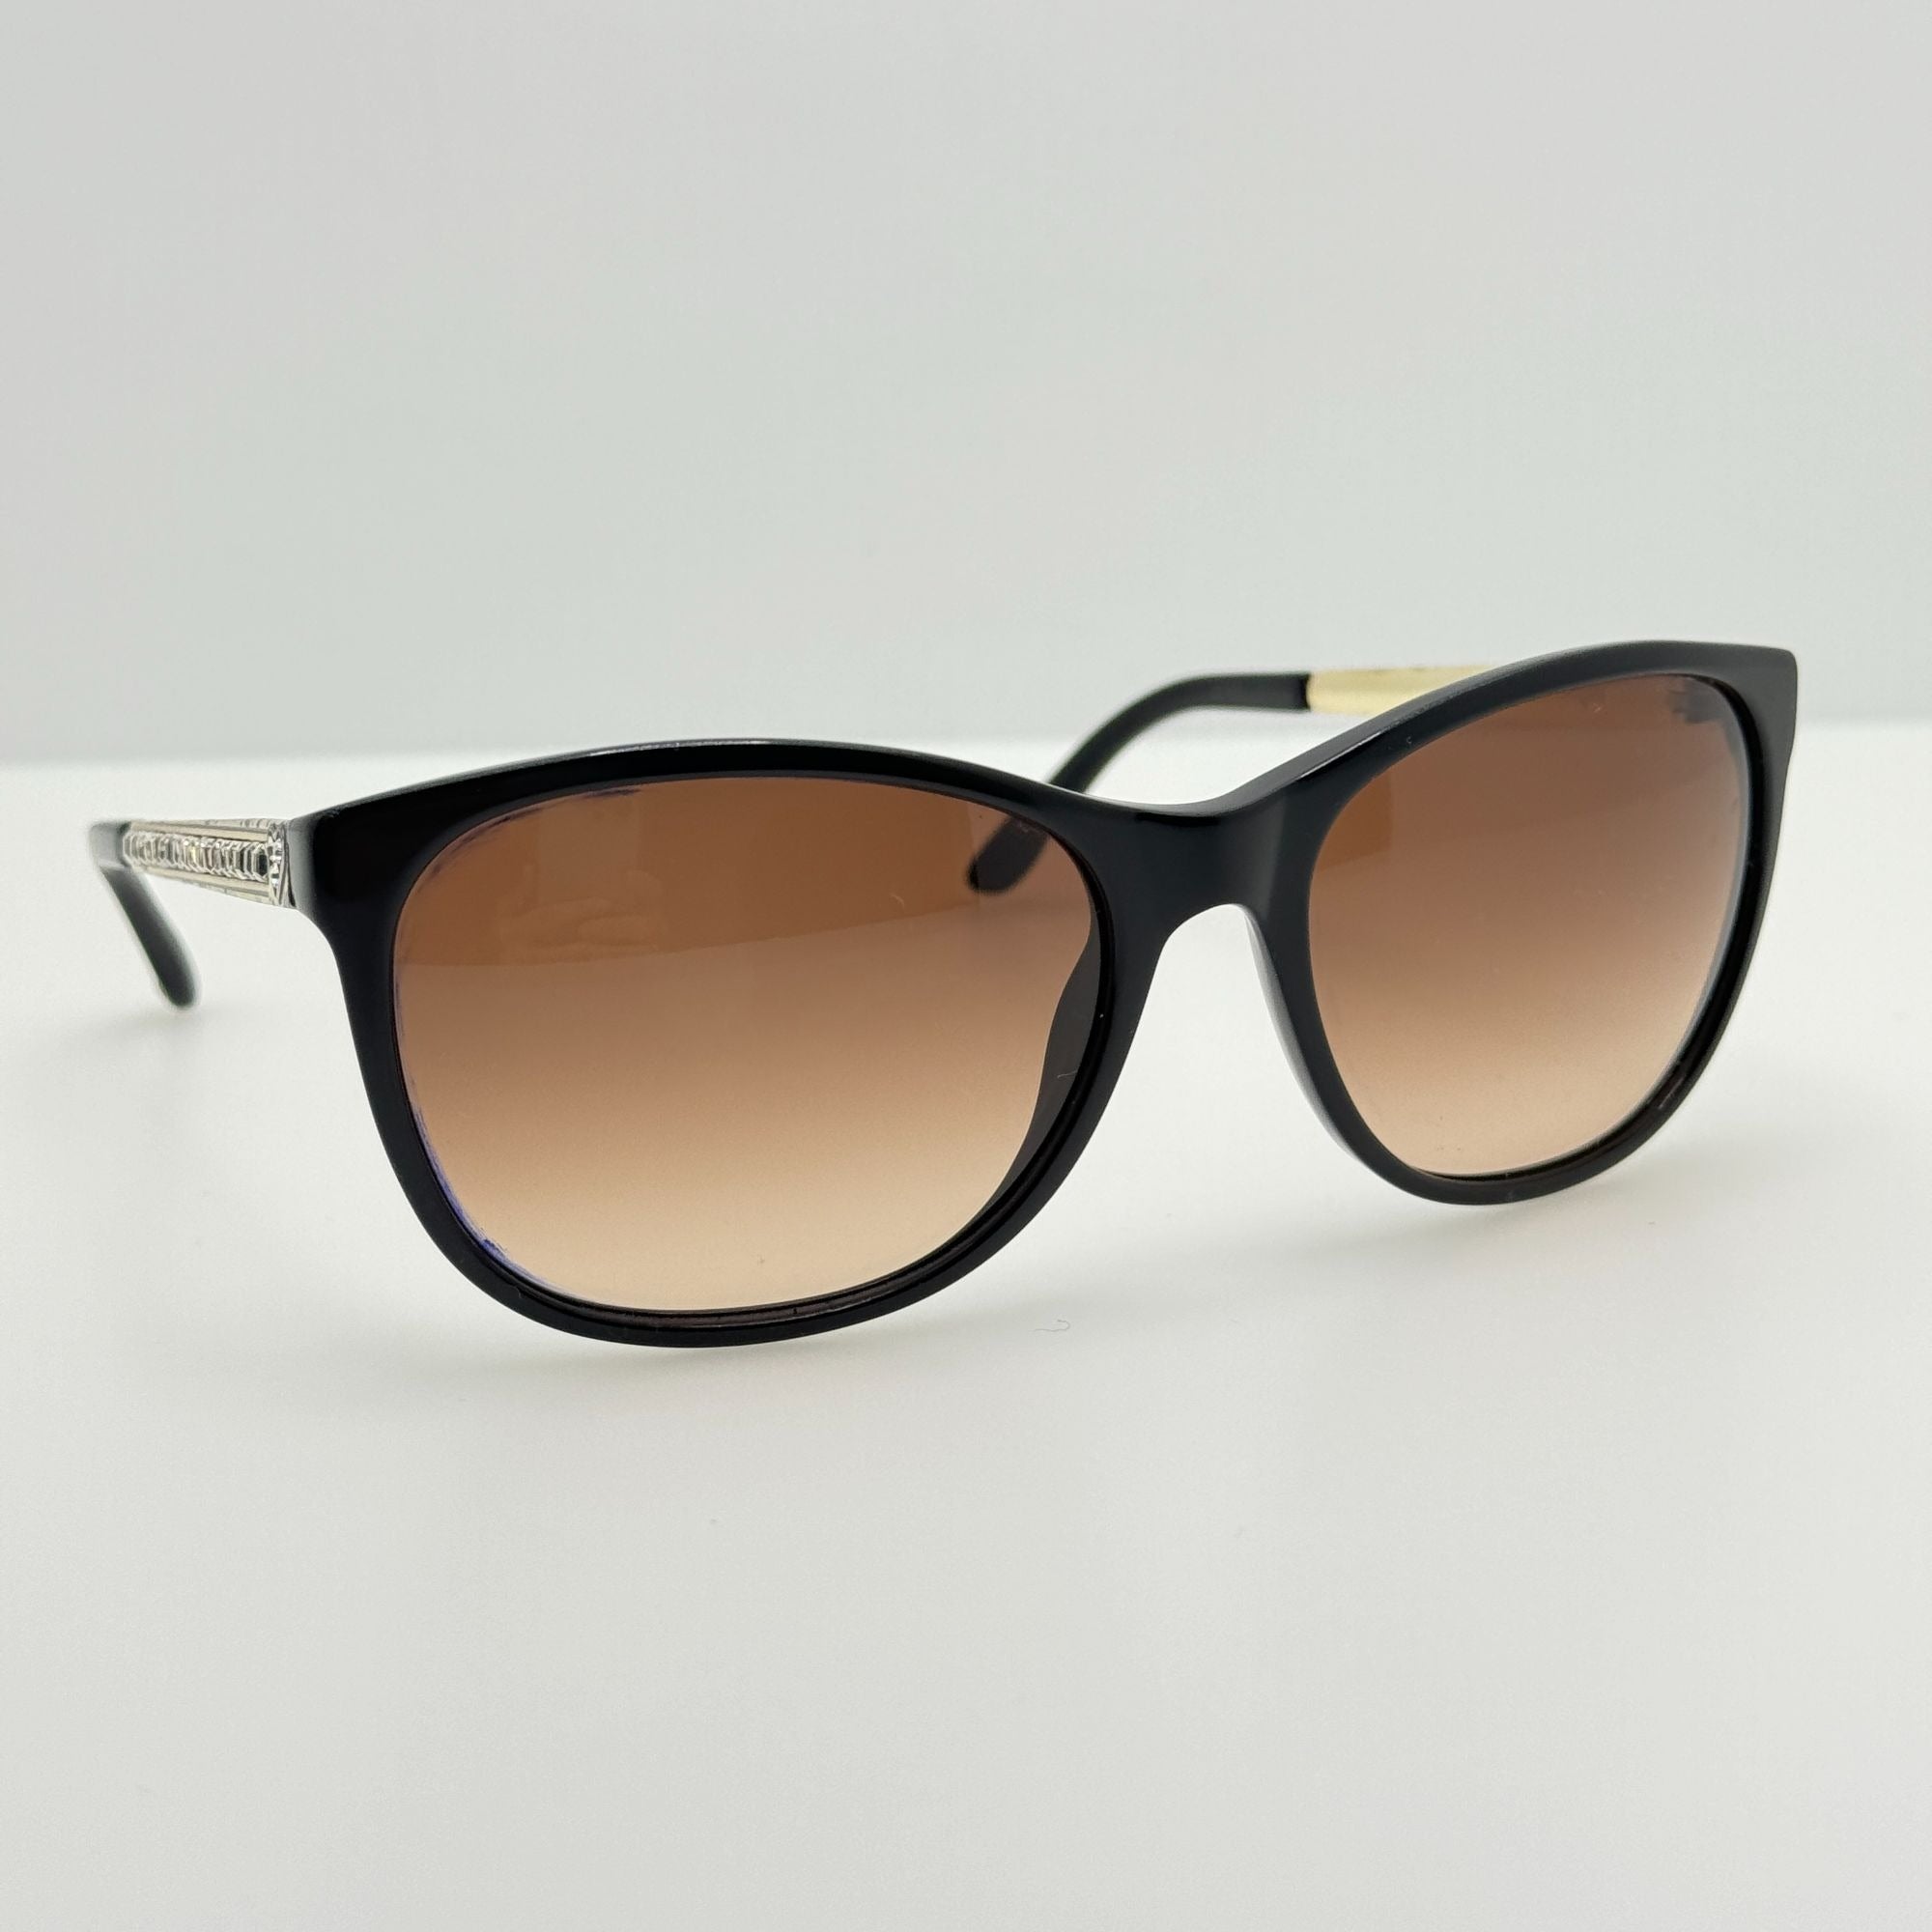 Brighton-Sunglasses-Spectrum-A11903-135-505-Handmade-58-18-135-Sunglasses